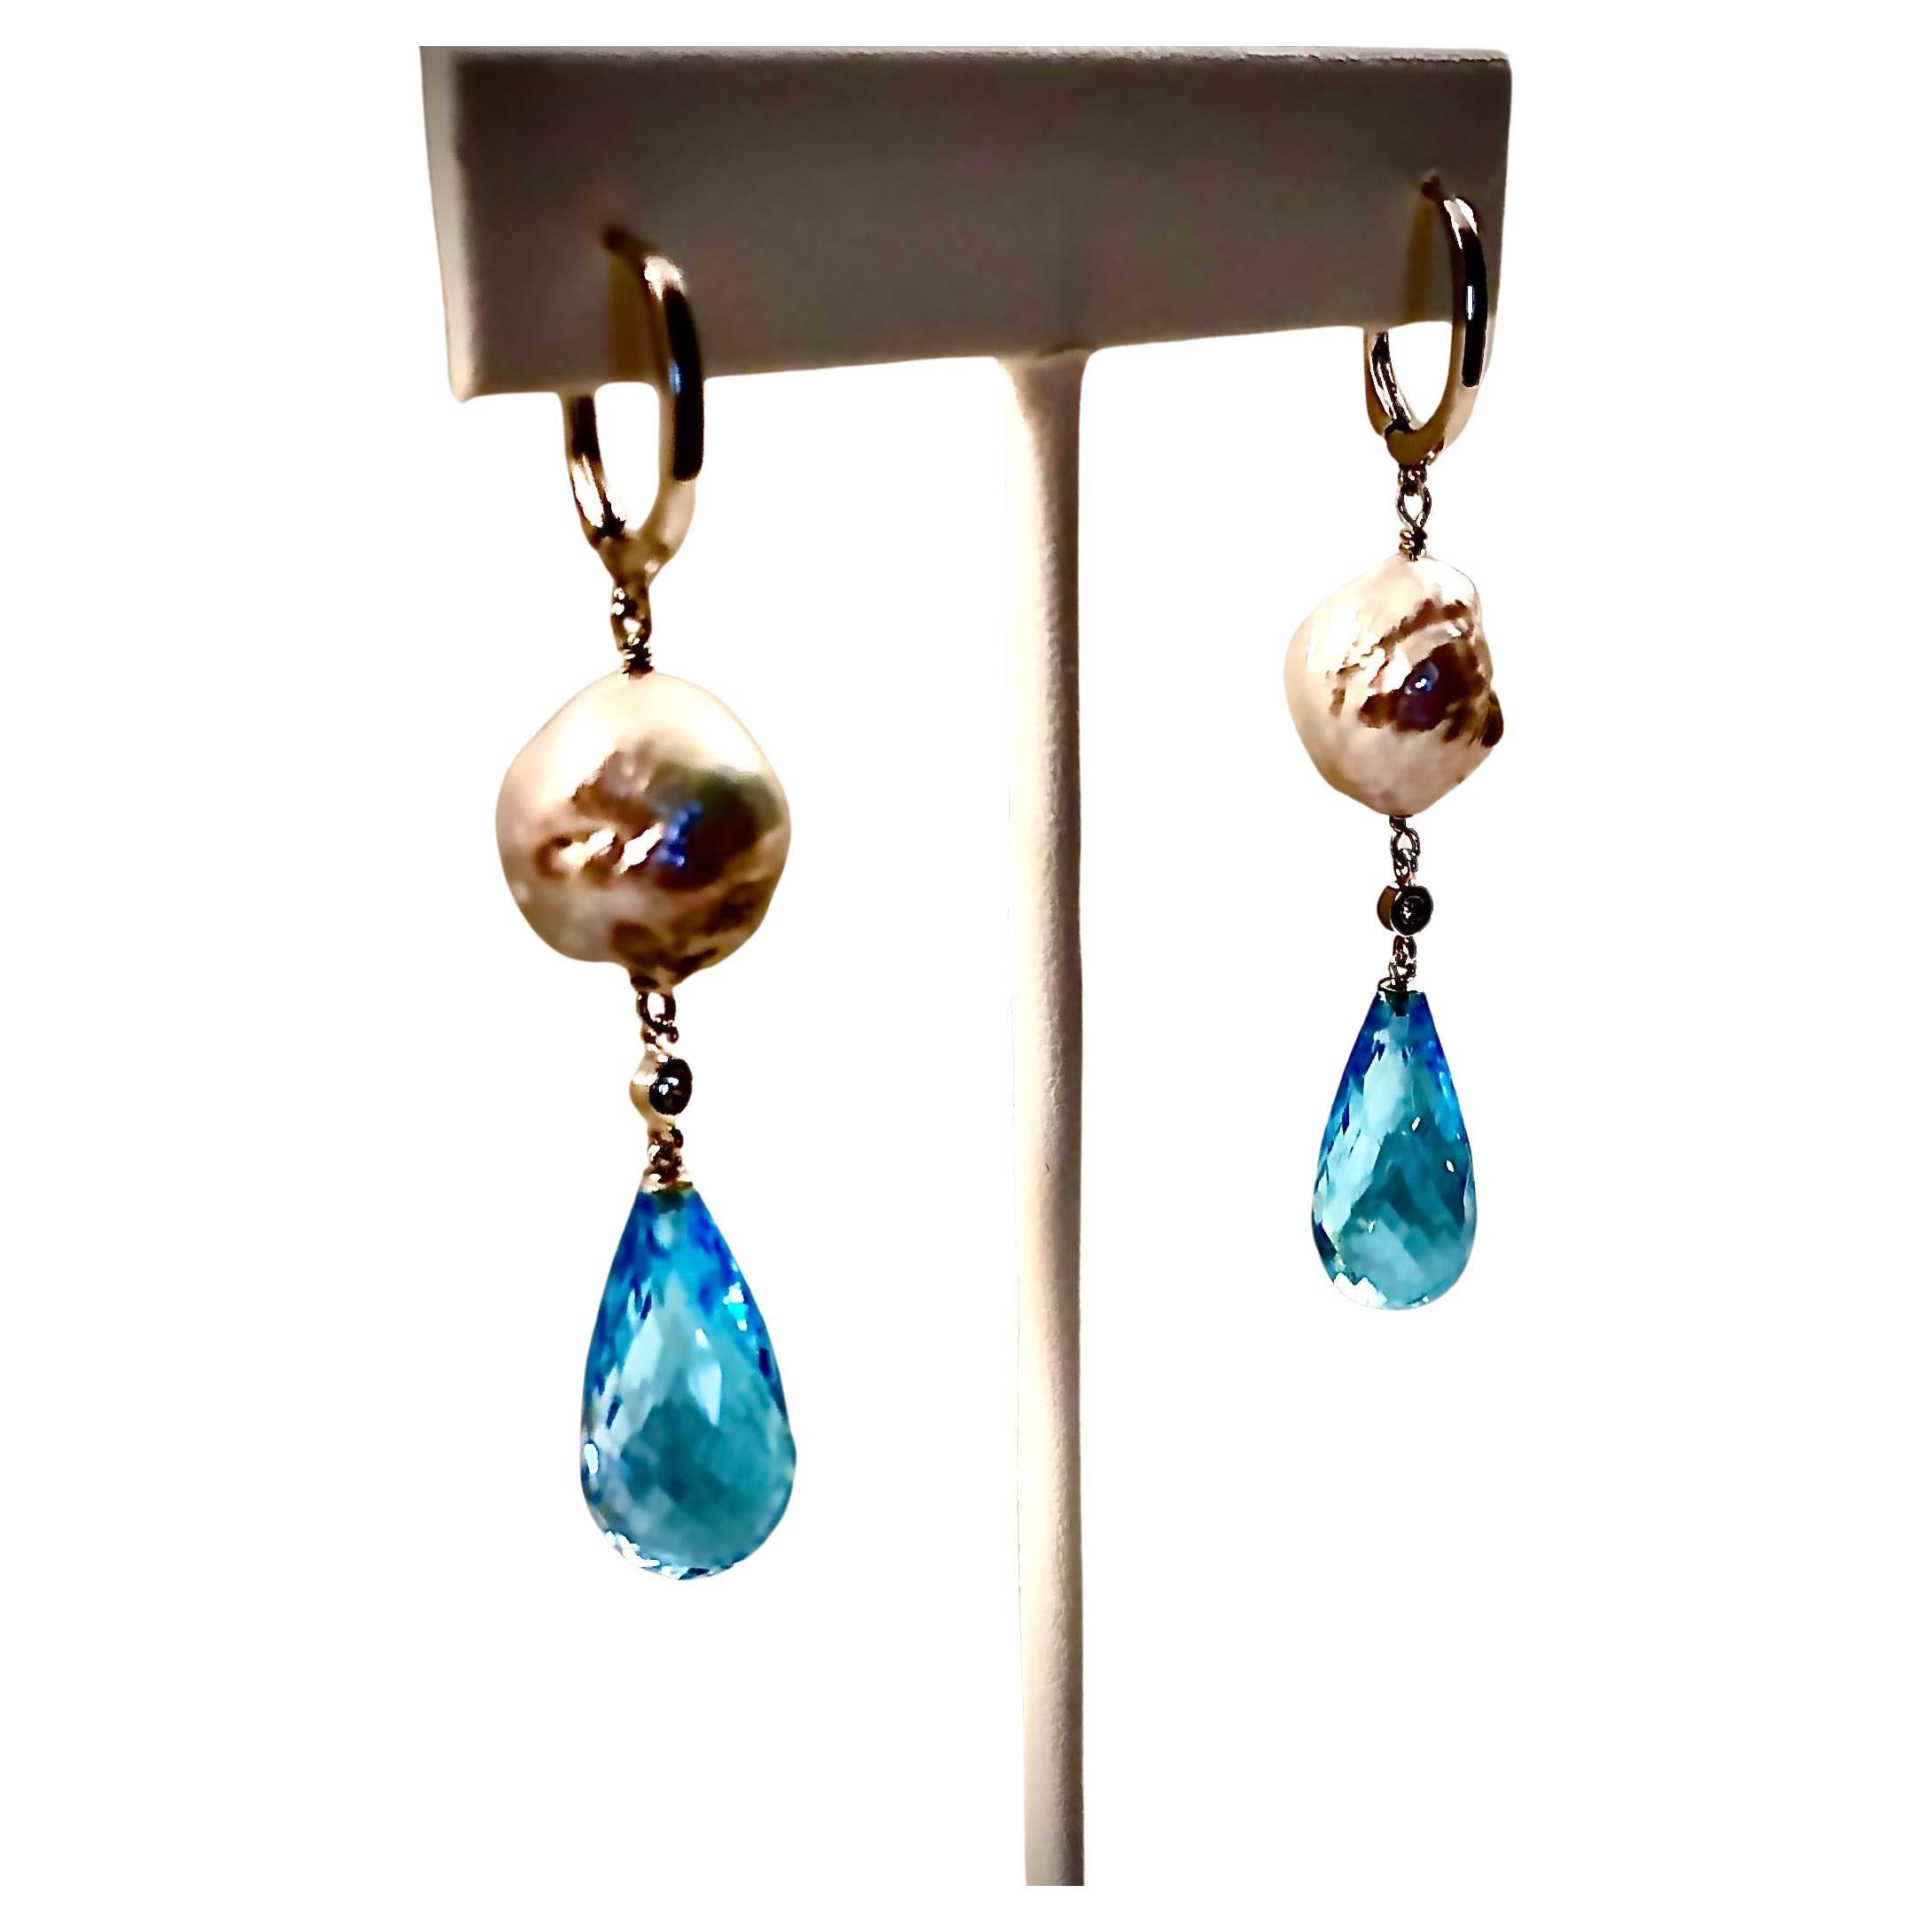  Pearl and blue topaz earrings